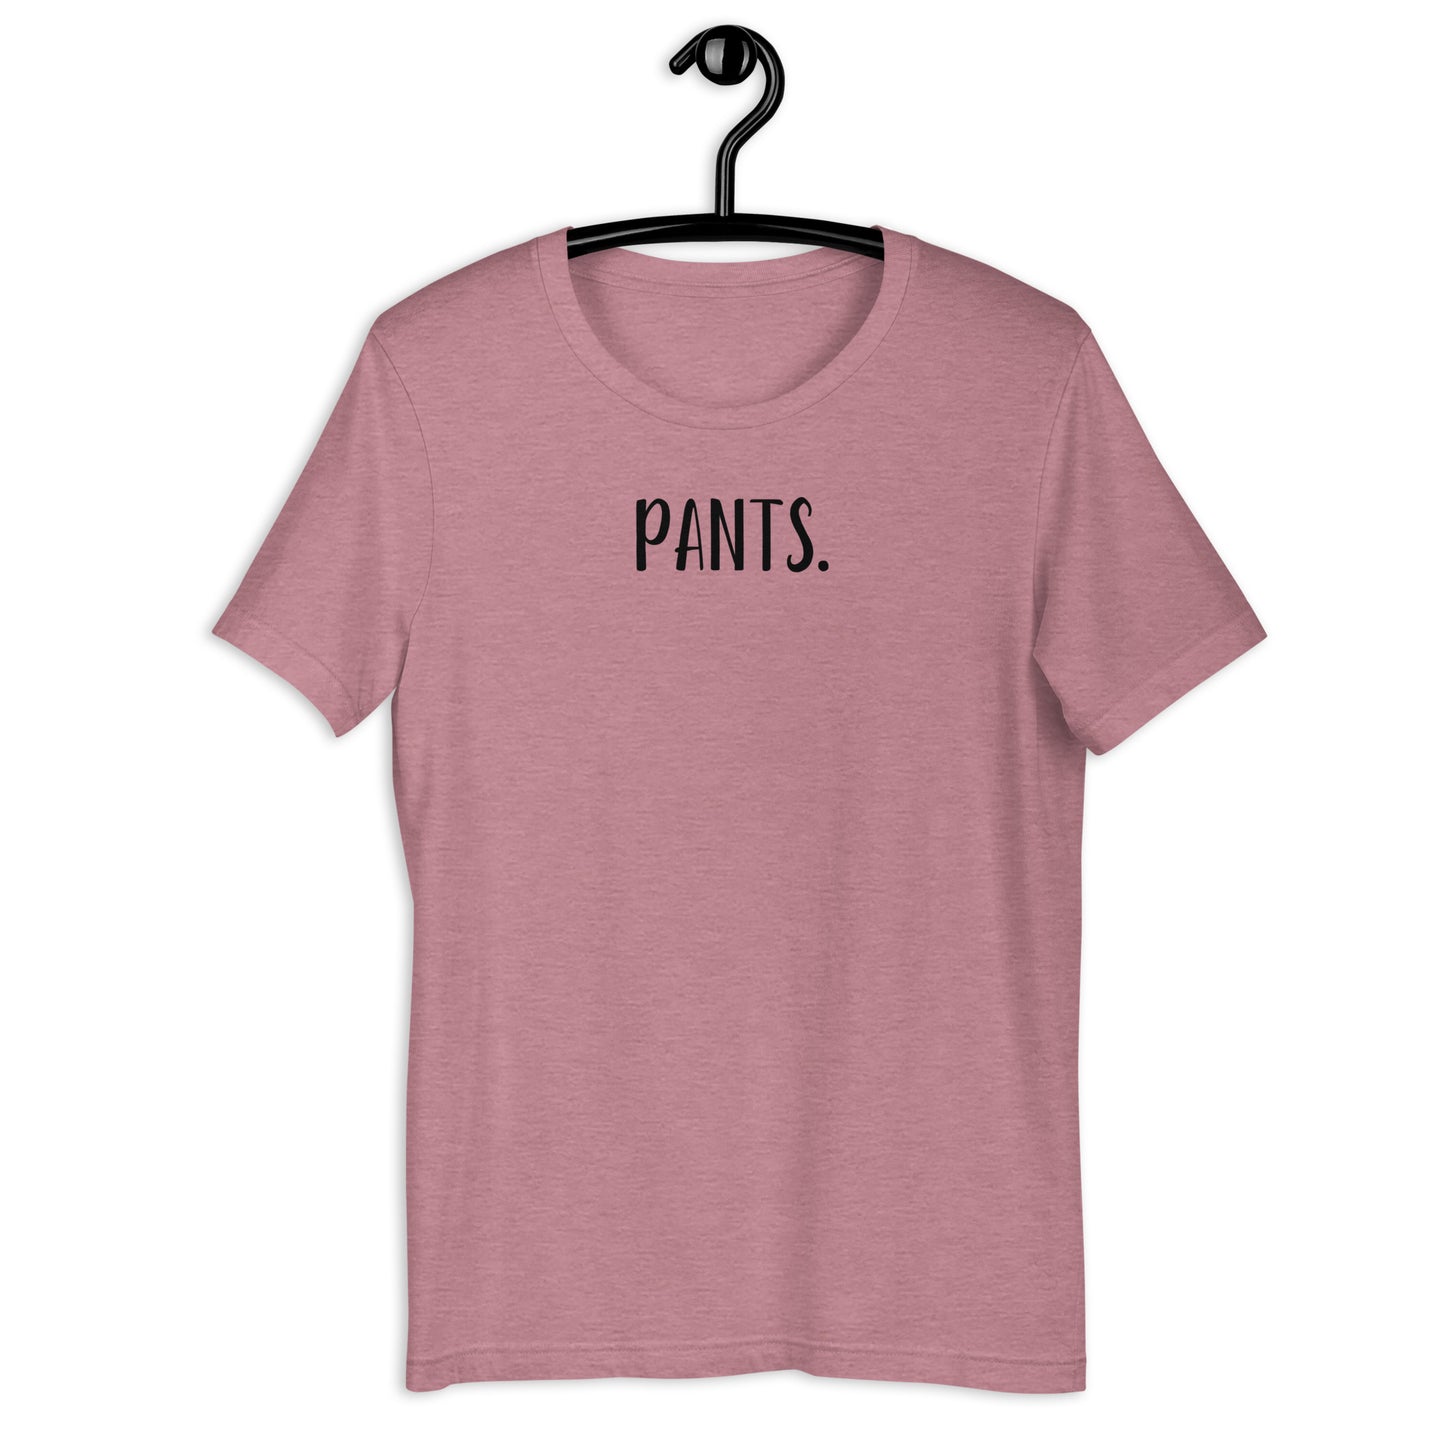 Pants. Shirt